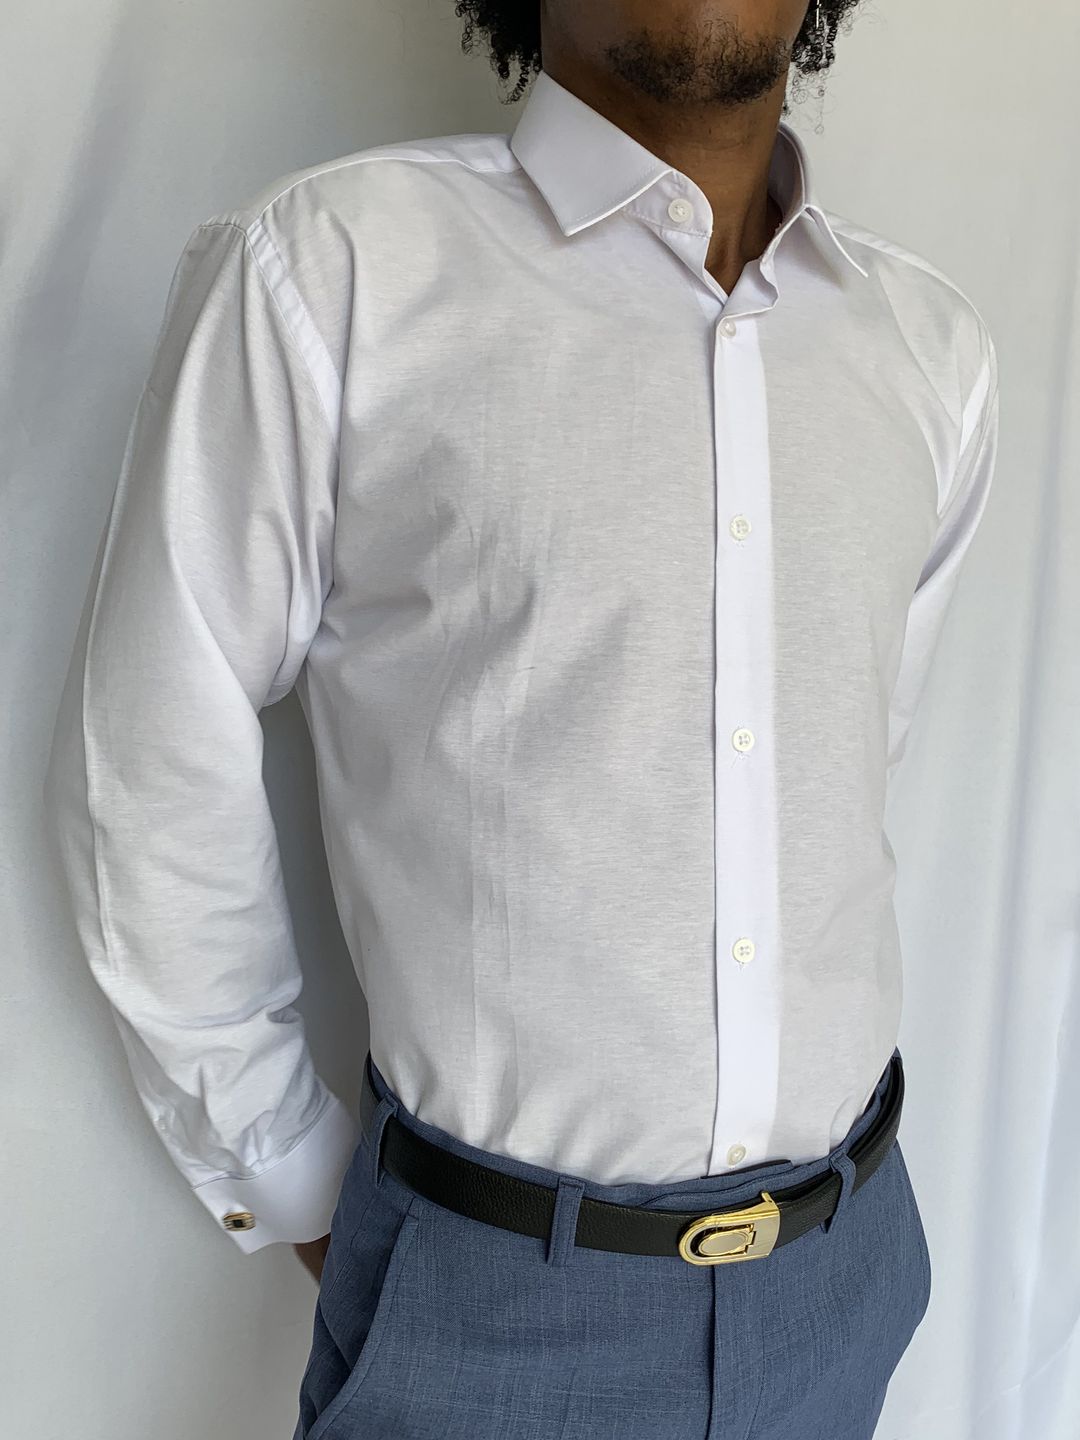 Camisa Social Branca slim Punho Duplo - Roberto Alfaiate | Trajes fino sob medida